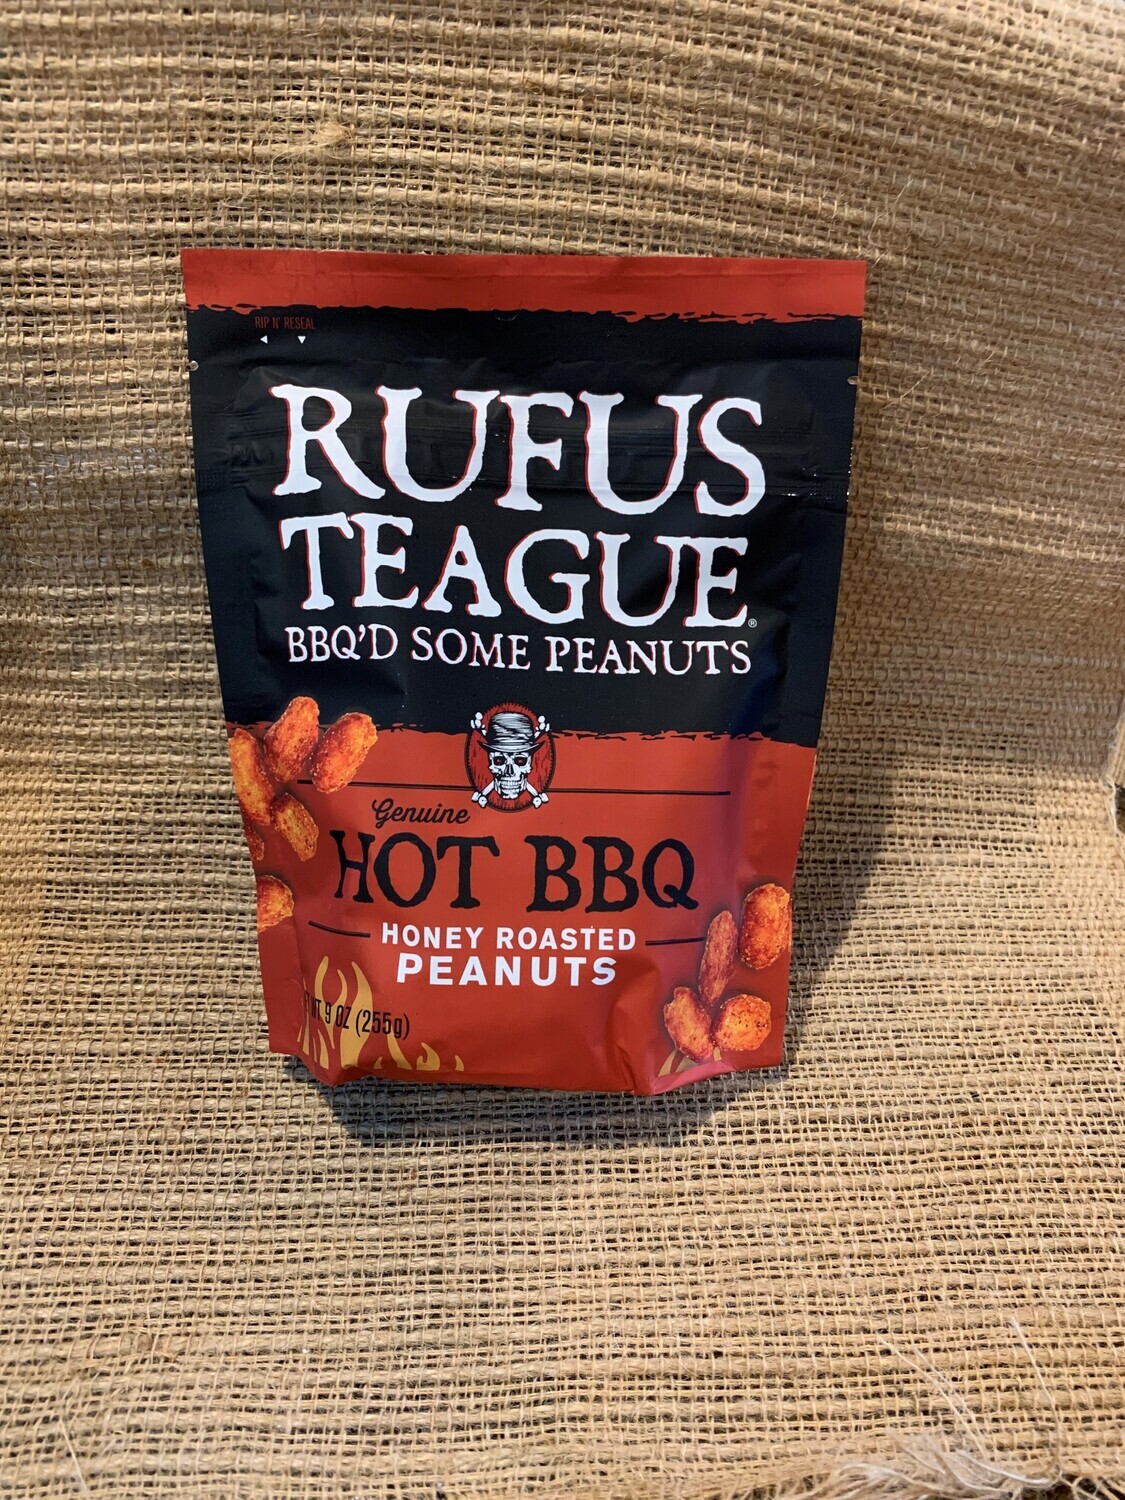 Rufus Teague Hot BBQ Honey Roasted Peanuts